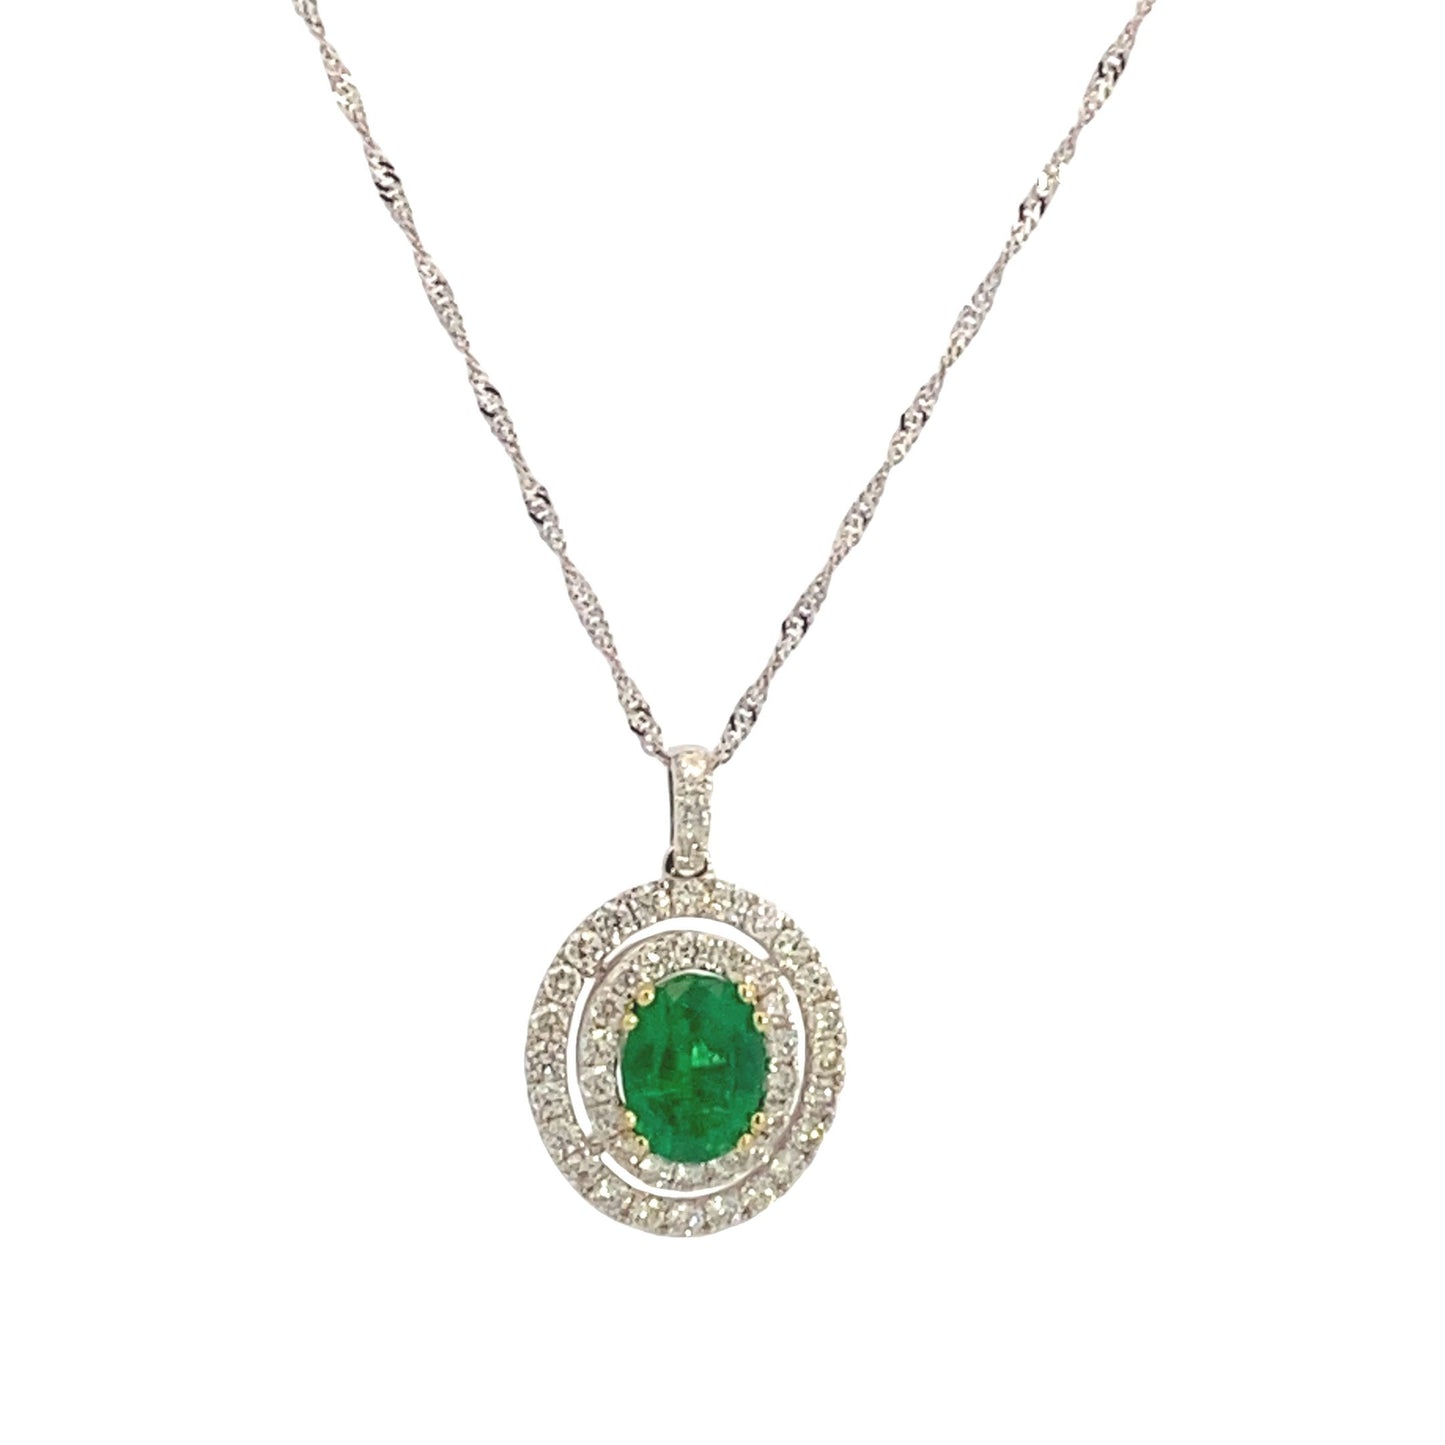 Stern International | 14K White Gold Diamond and Emerald Pendant Necklace